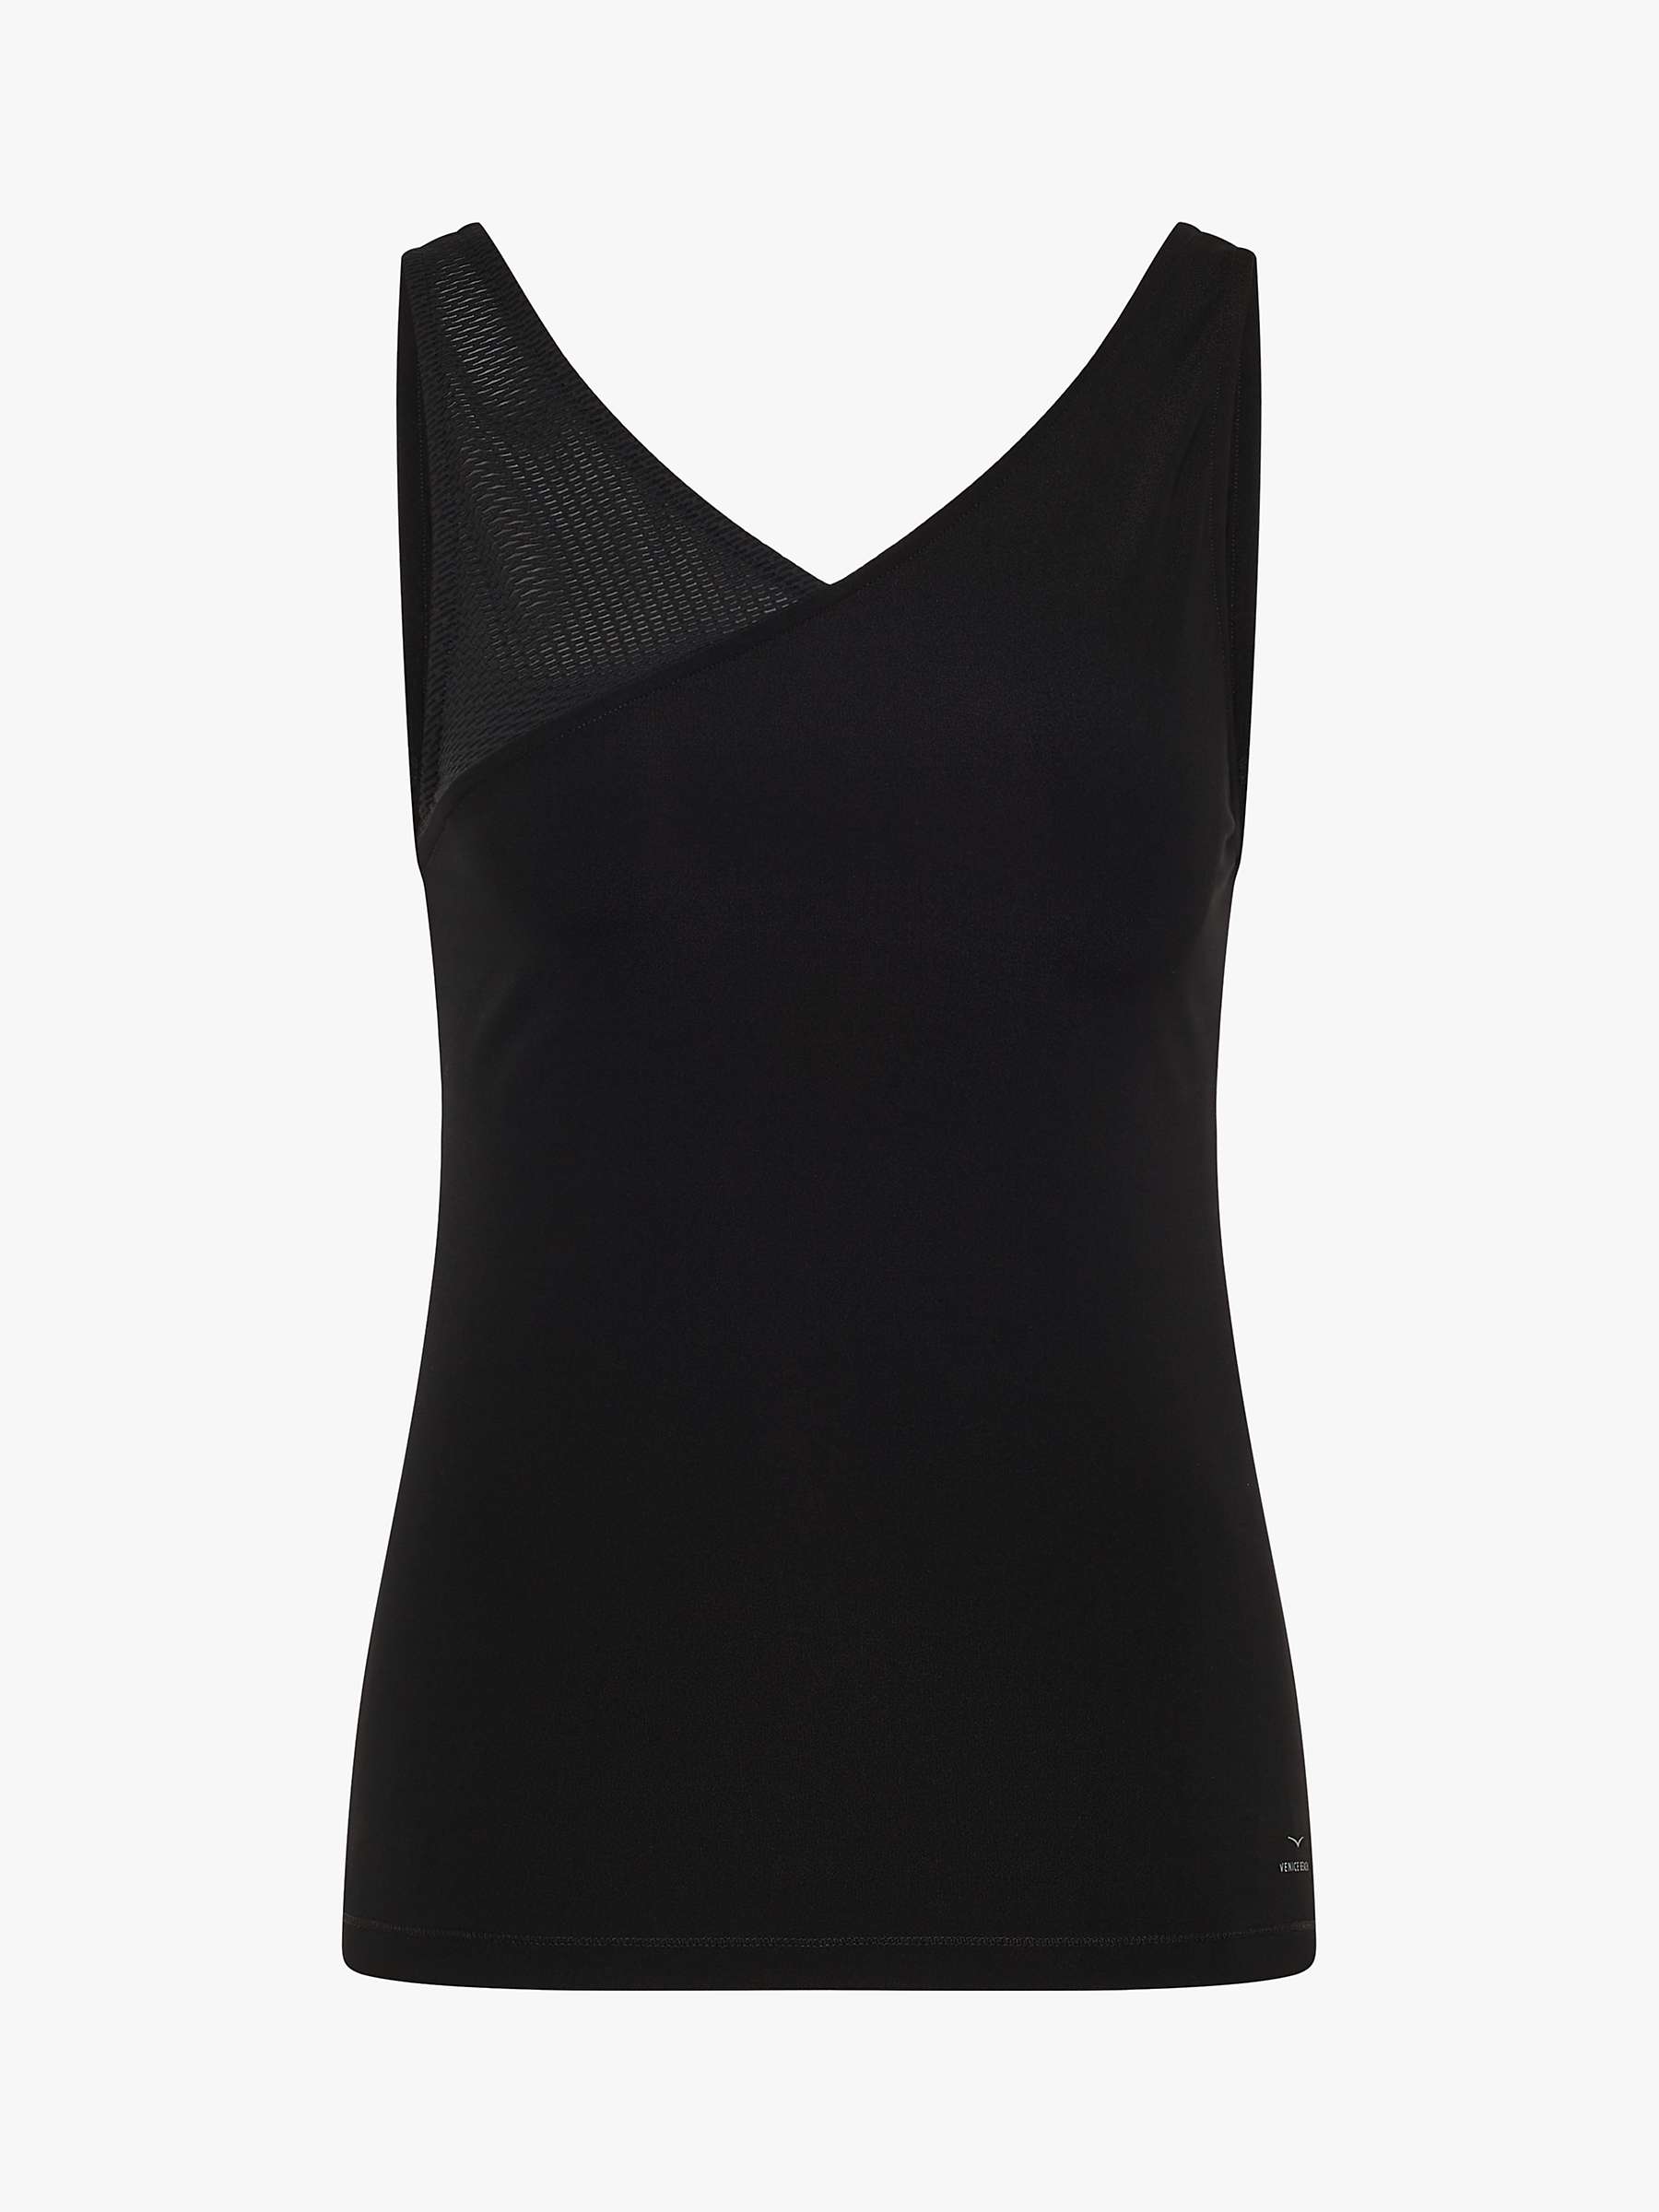 Buy Venice Beach Kelis Gym Vest, Black Online at johnlewis.com